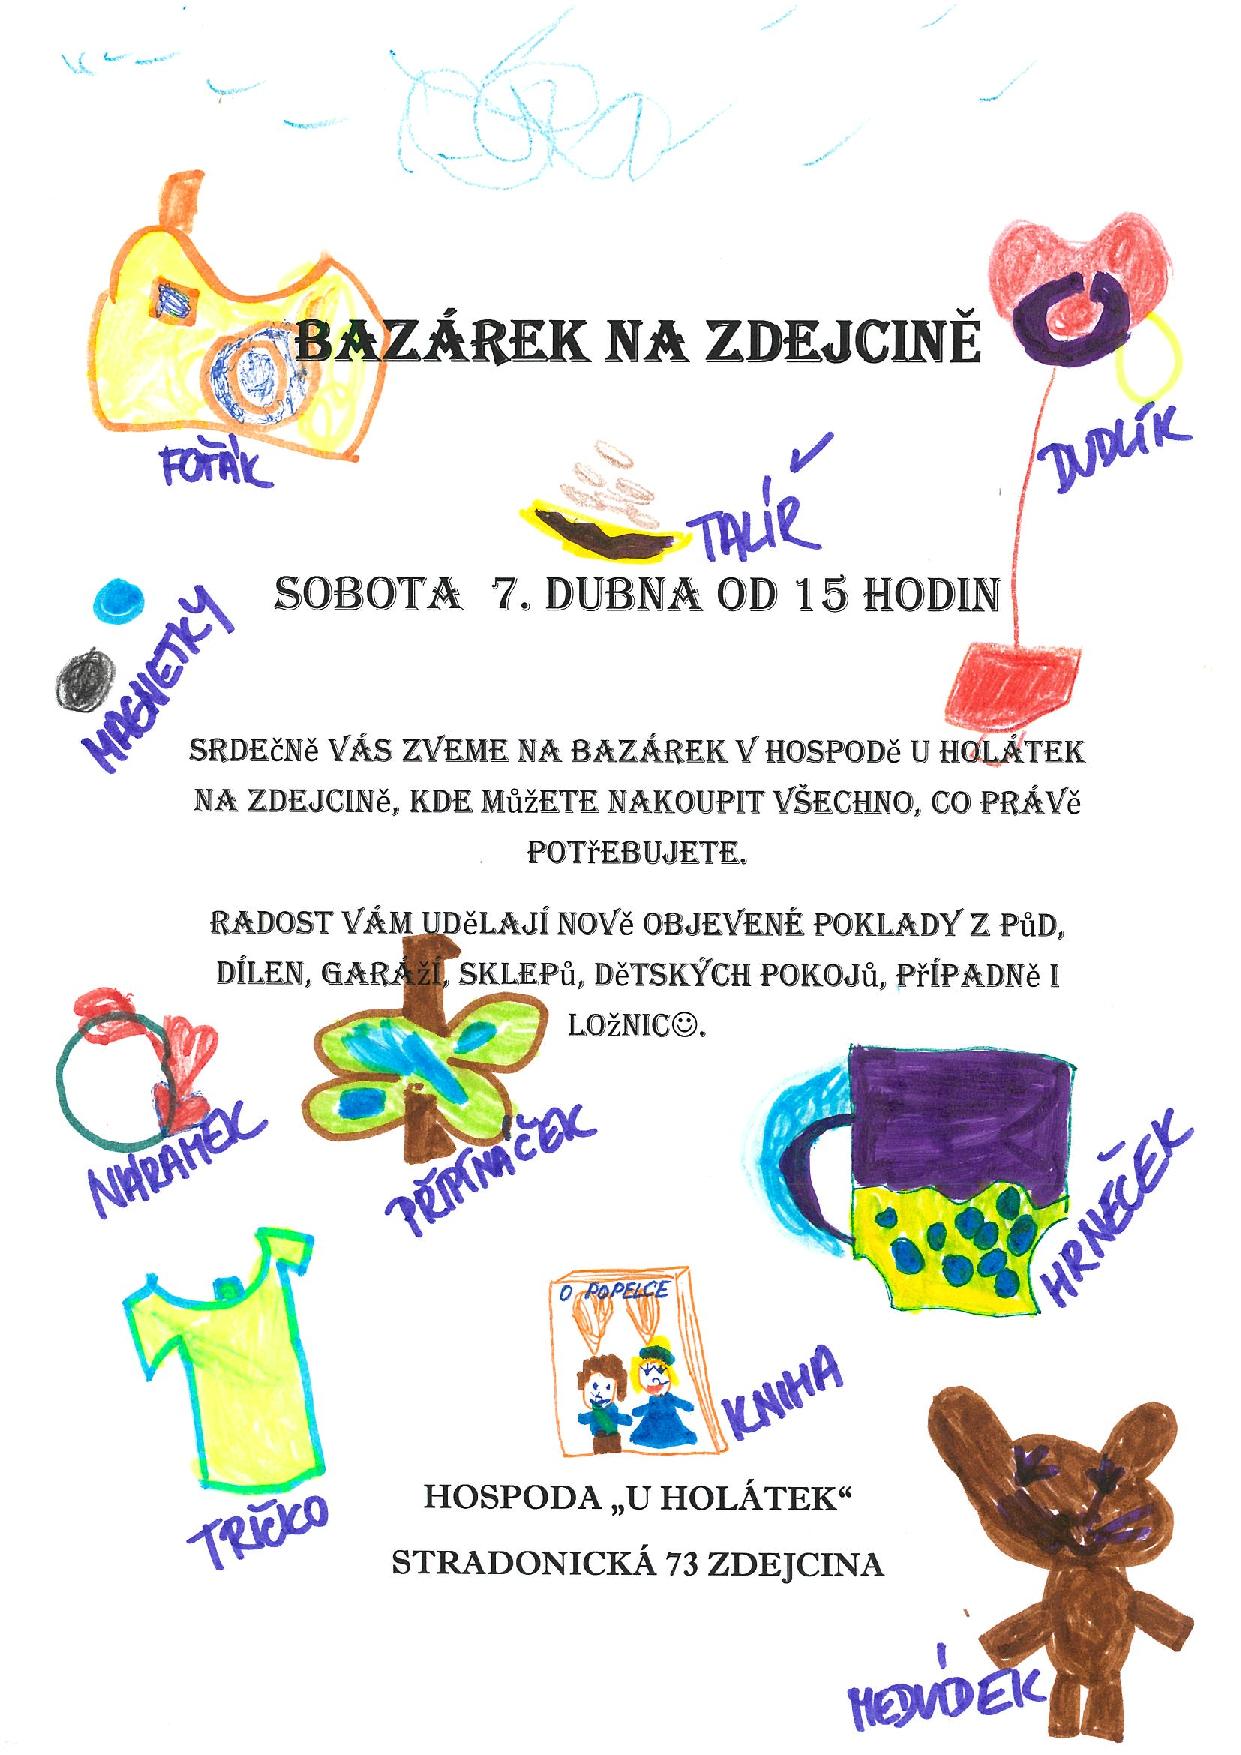 Bazarek1 4.18-page-001